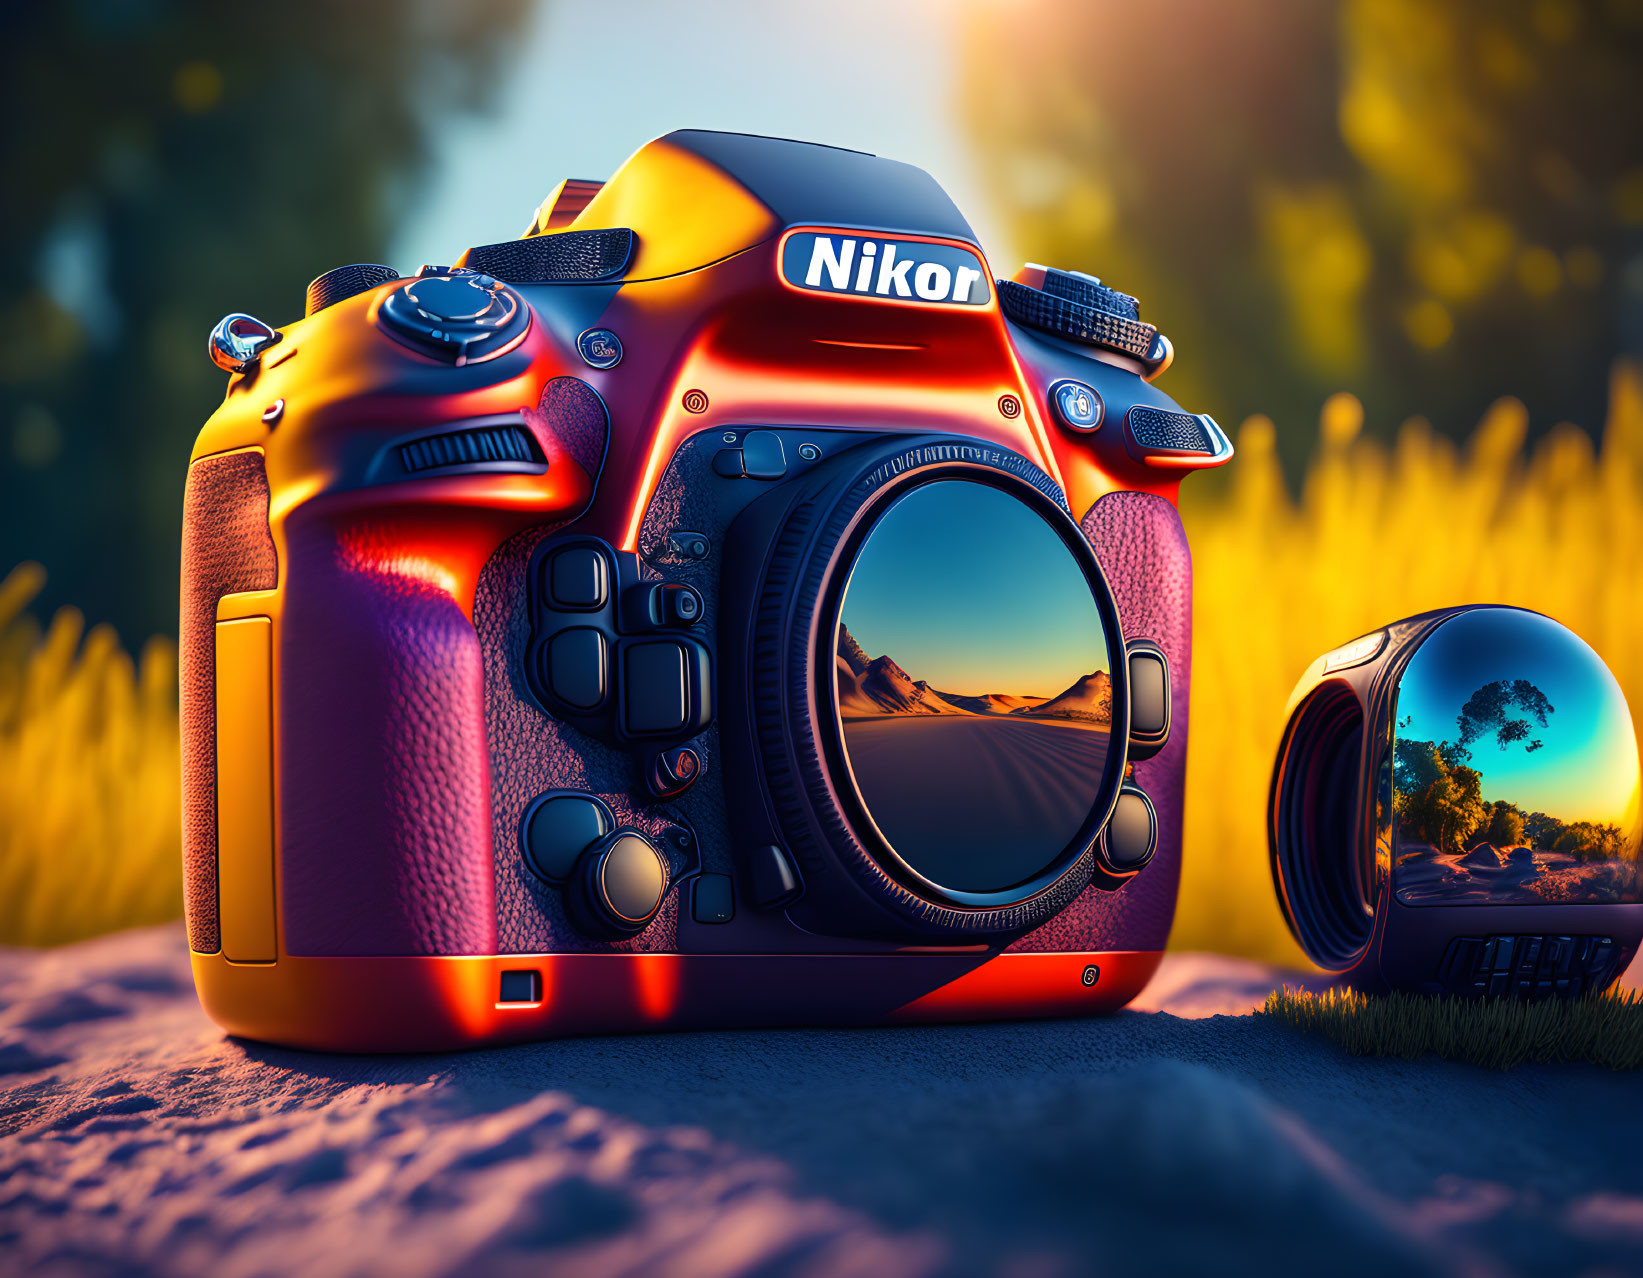 Nikon DSLR Camera at Sunset in Grass Field